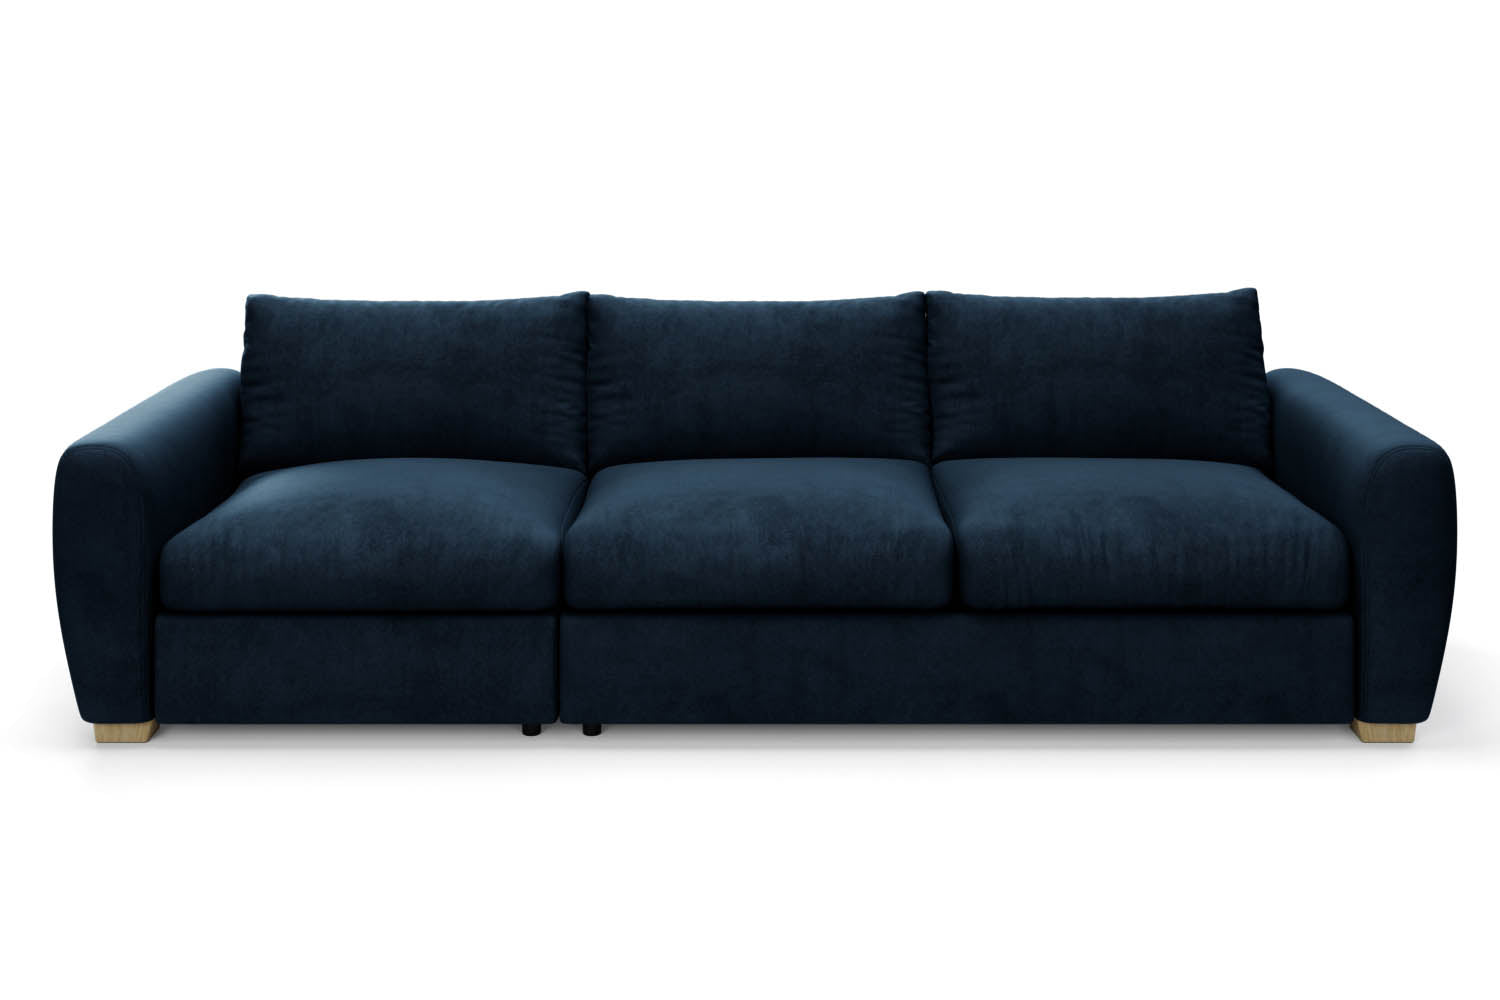 The Cloud Sundae - 4.5 Seater Sofa - Deep Blue